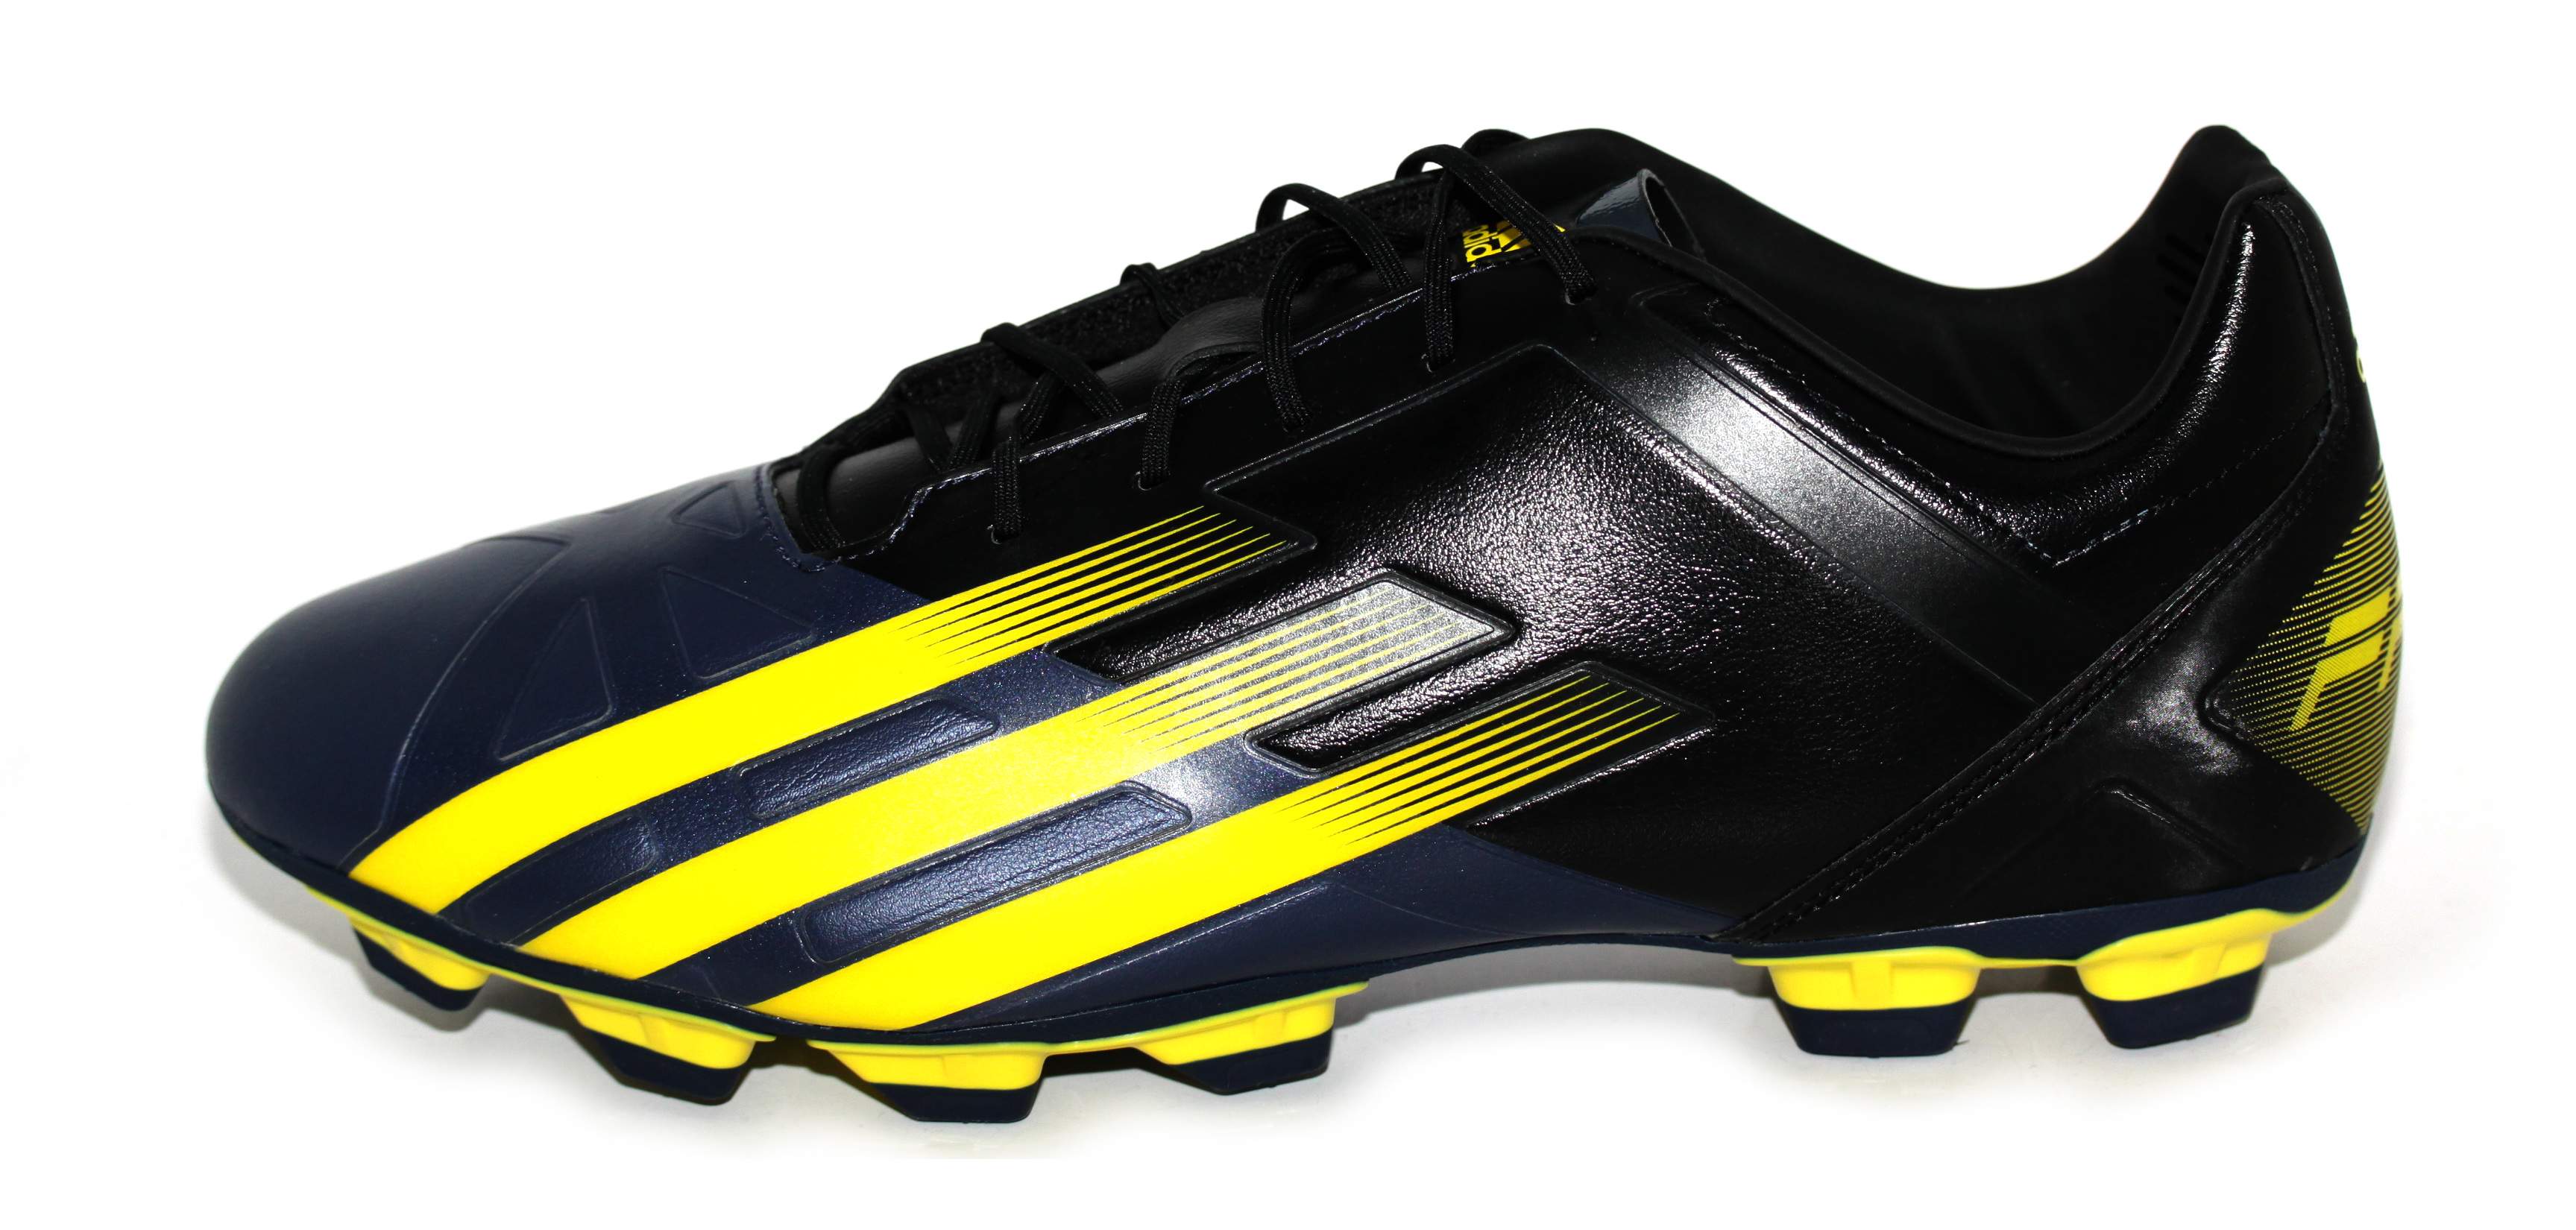 Adidas Mens Black Yellow Ff80 Pro Trx Fg Rugby Boots G64756 Ebay